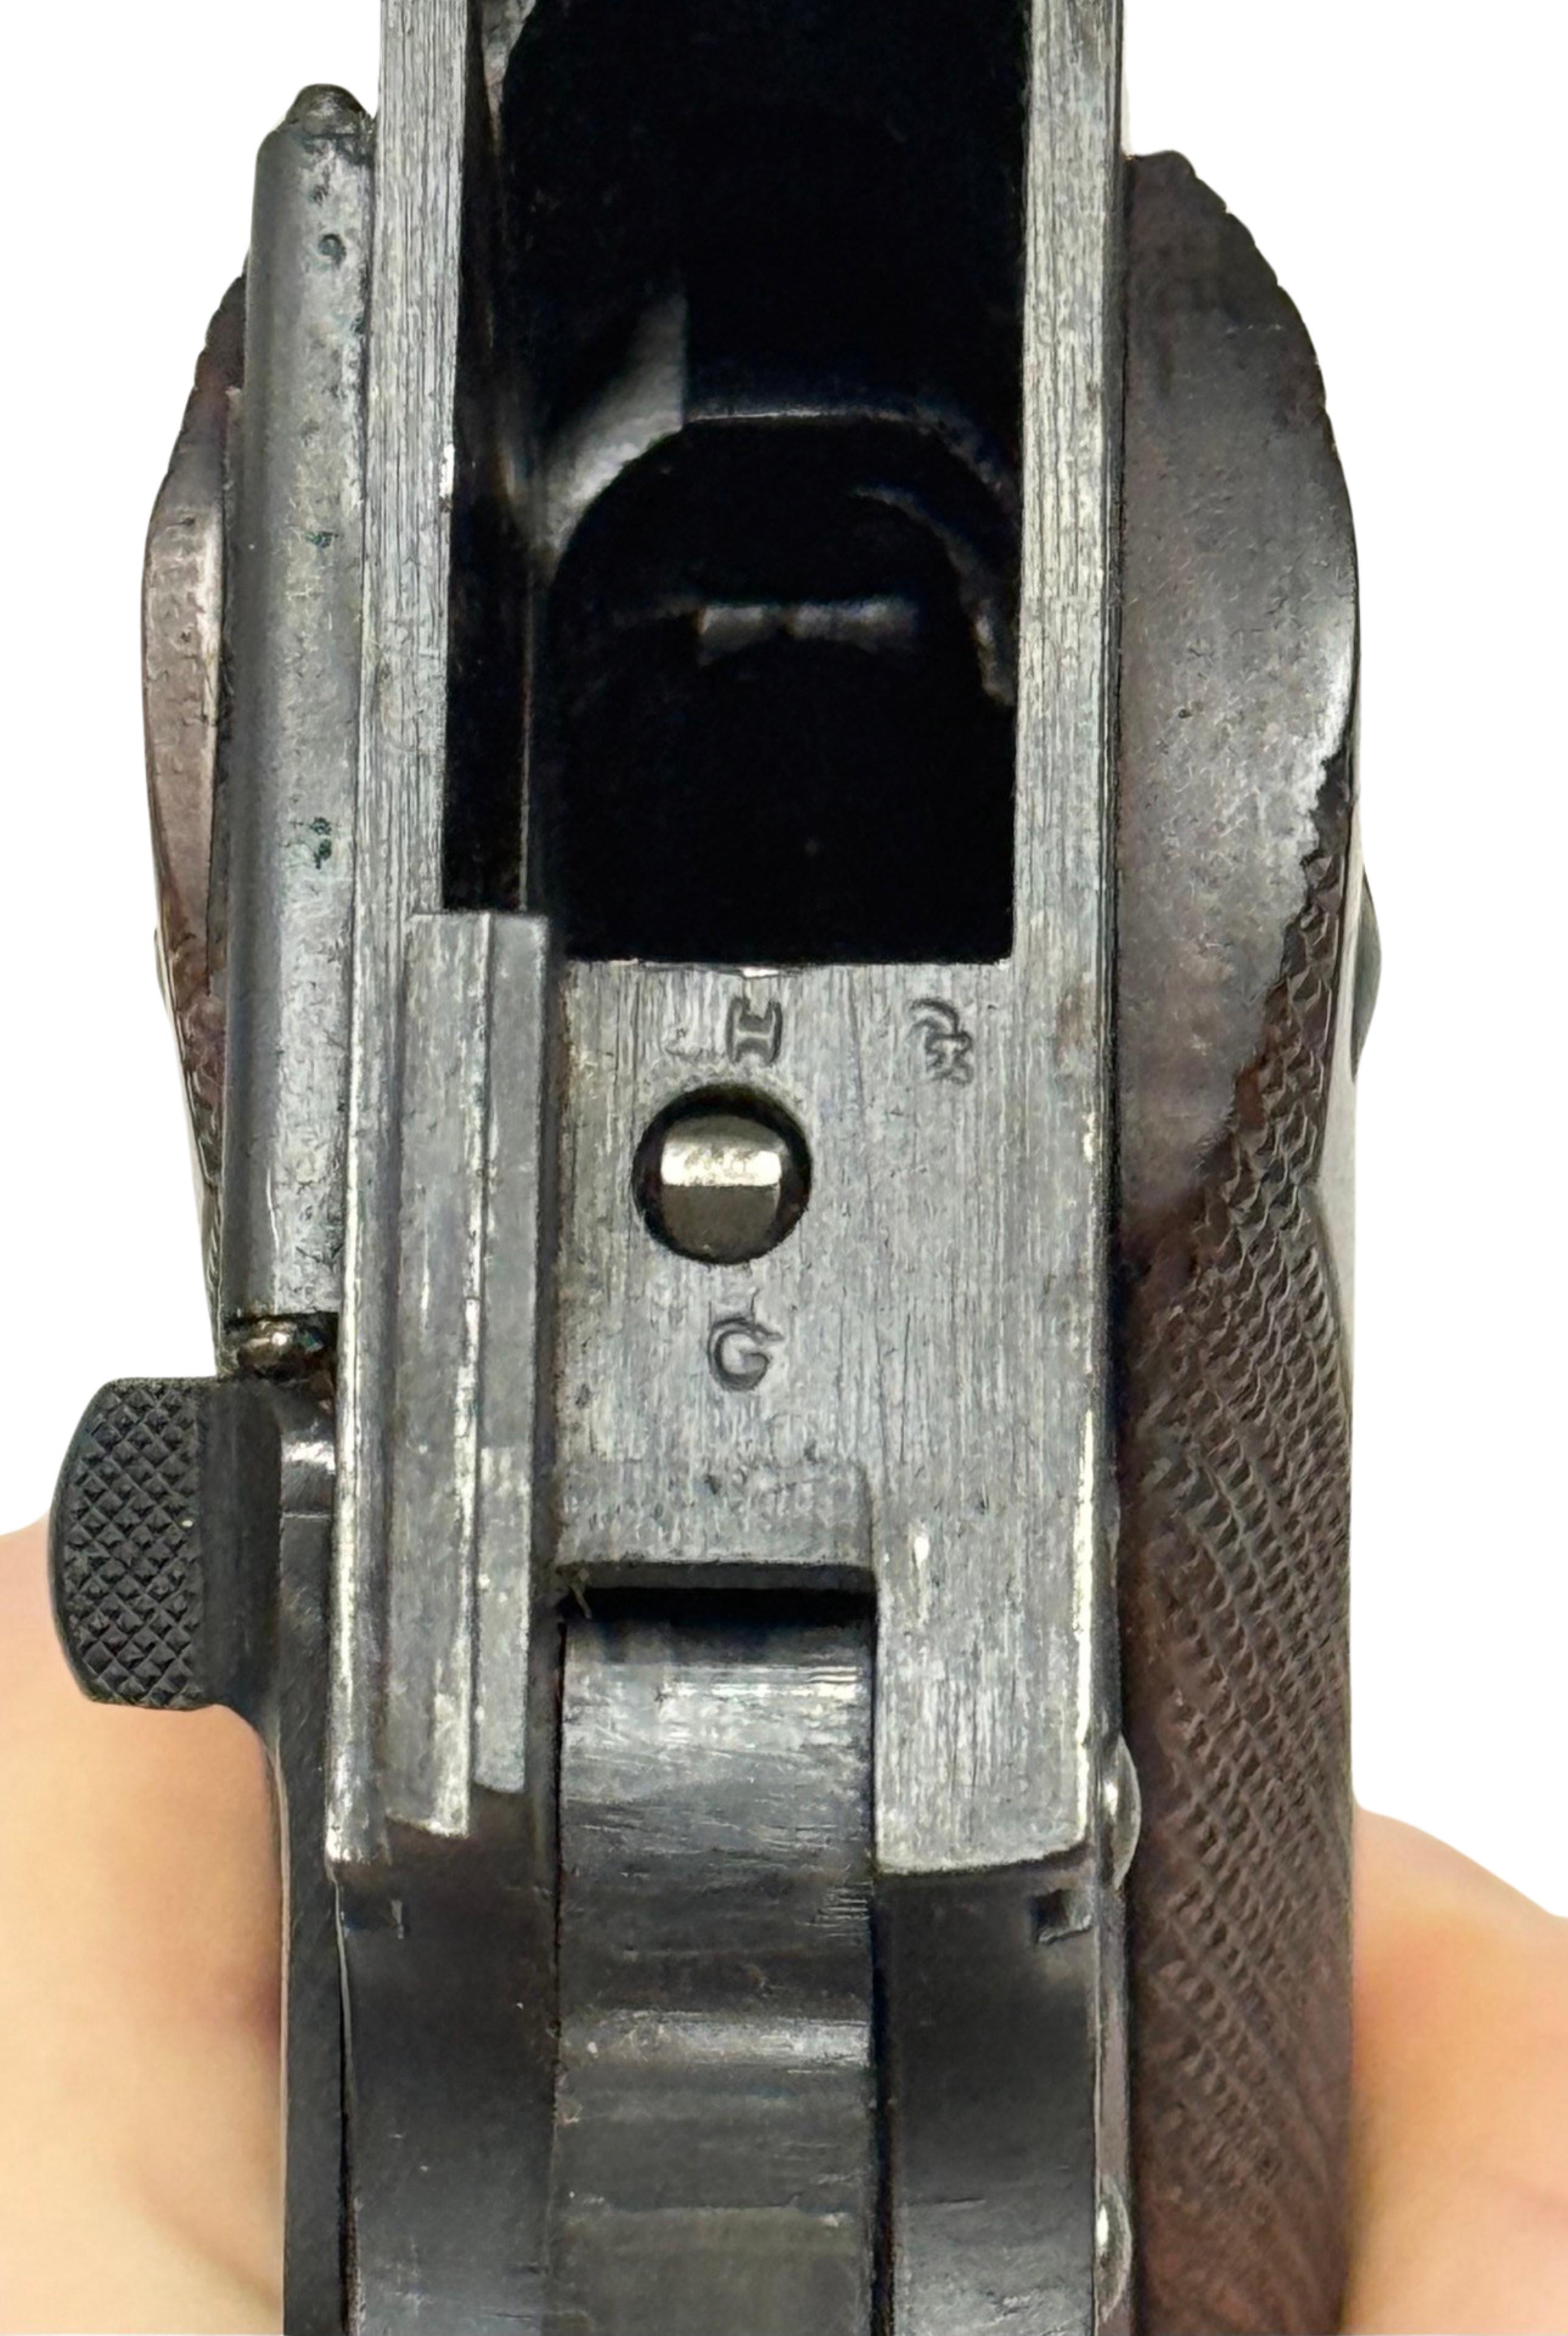 1918 US Army Colt 1911 .45 ACP Semi-Automatic Pistol